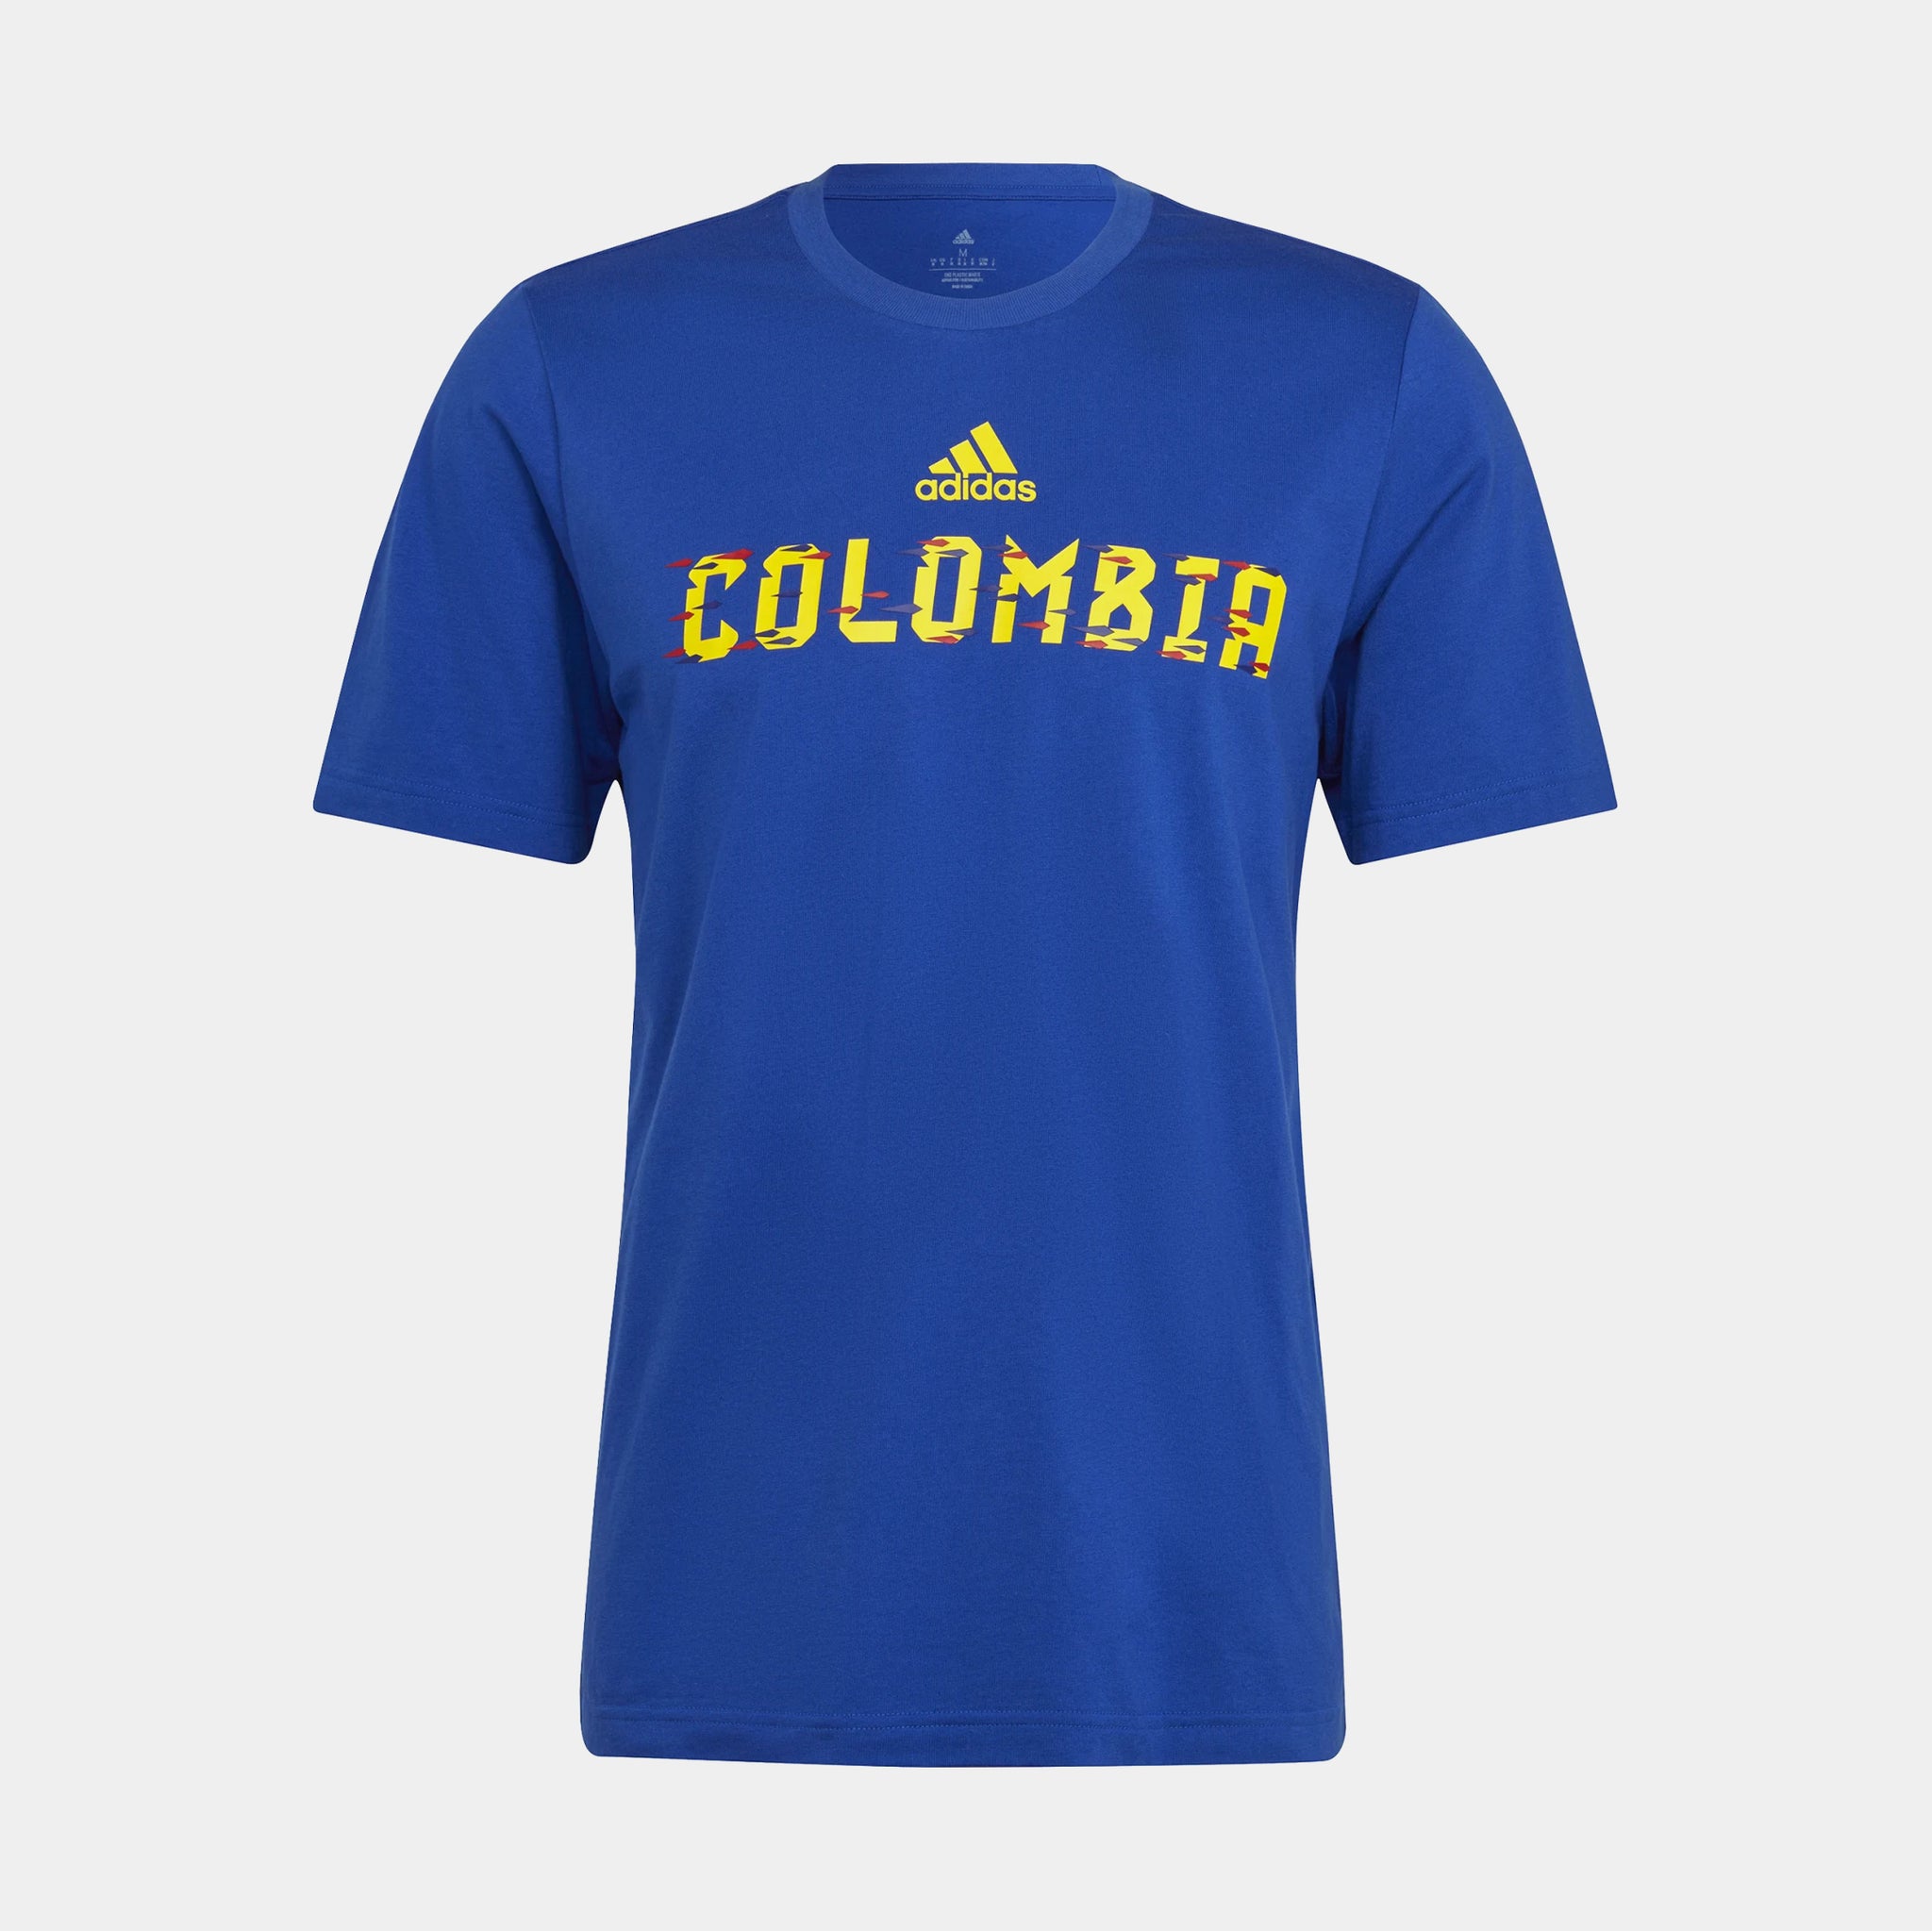 adidas Fifa World Cup 2022 Colombia Mens Short Sleeve Shirt Blue